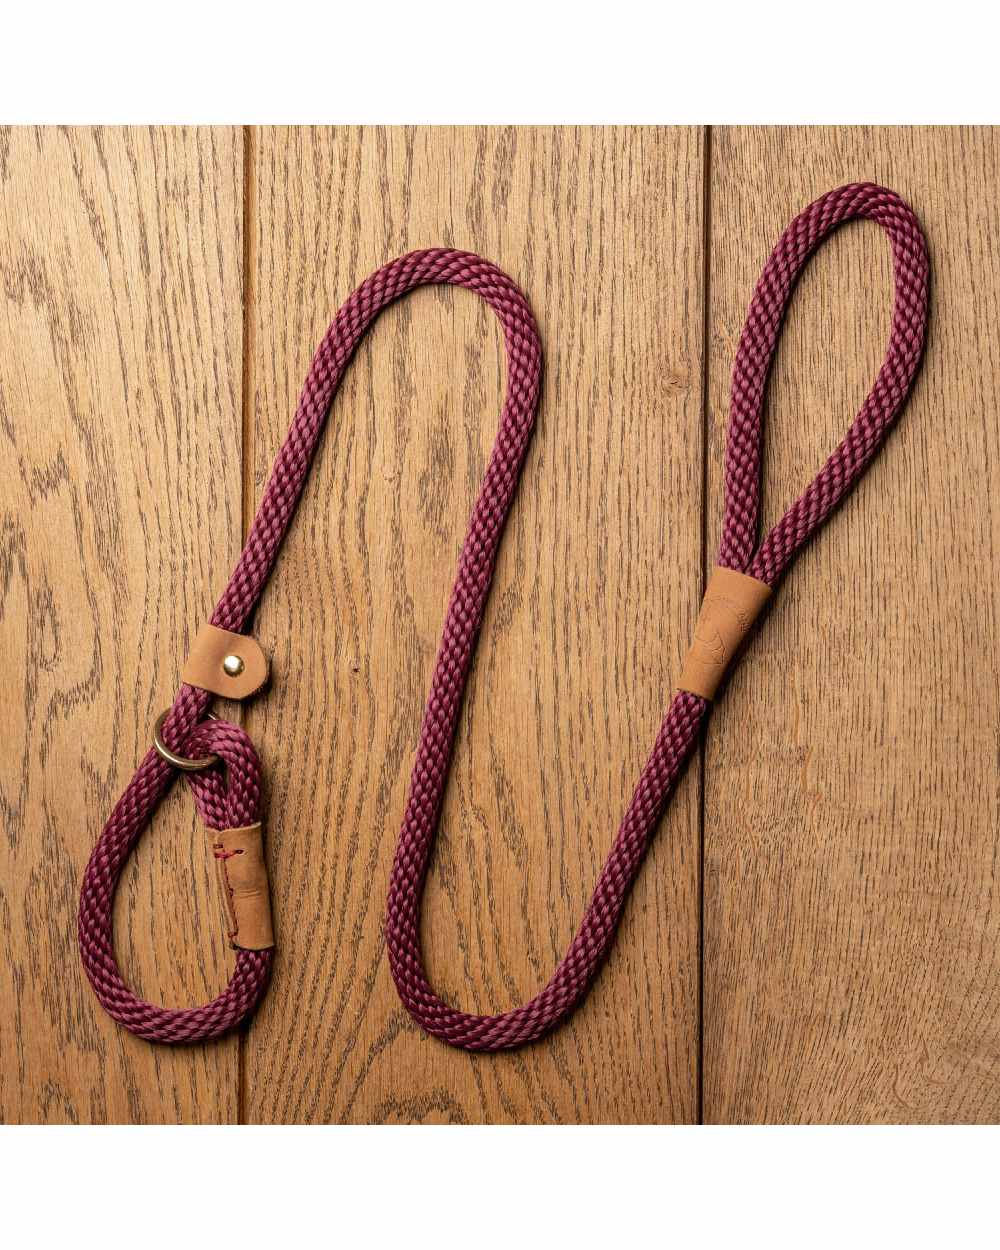 Burgundy coloured Ruff &amp; Tumble Slip Dog Leads on wooden background 